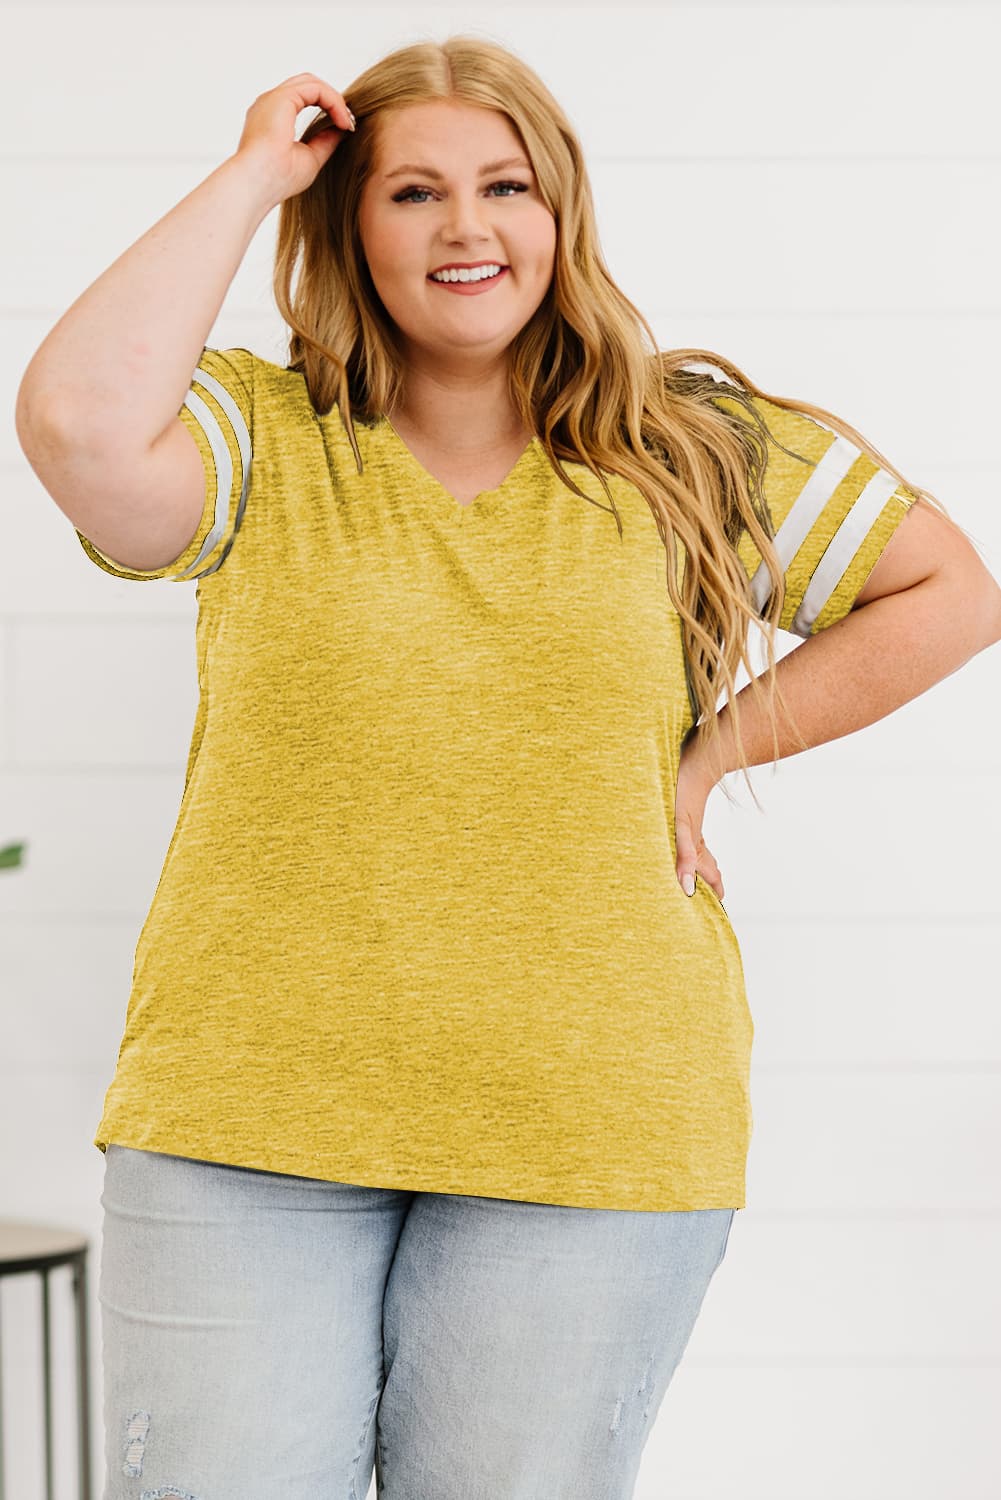 Plus Size Striped V-Neck Tee Shirt (10 Colors)  Krazy Heart Designs Boutique Mustard 1X 